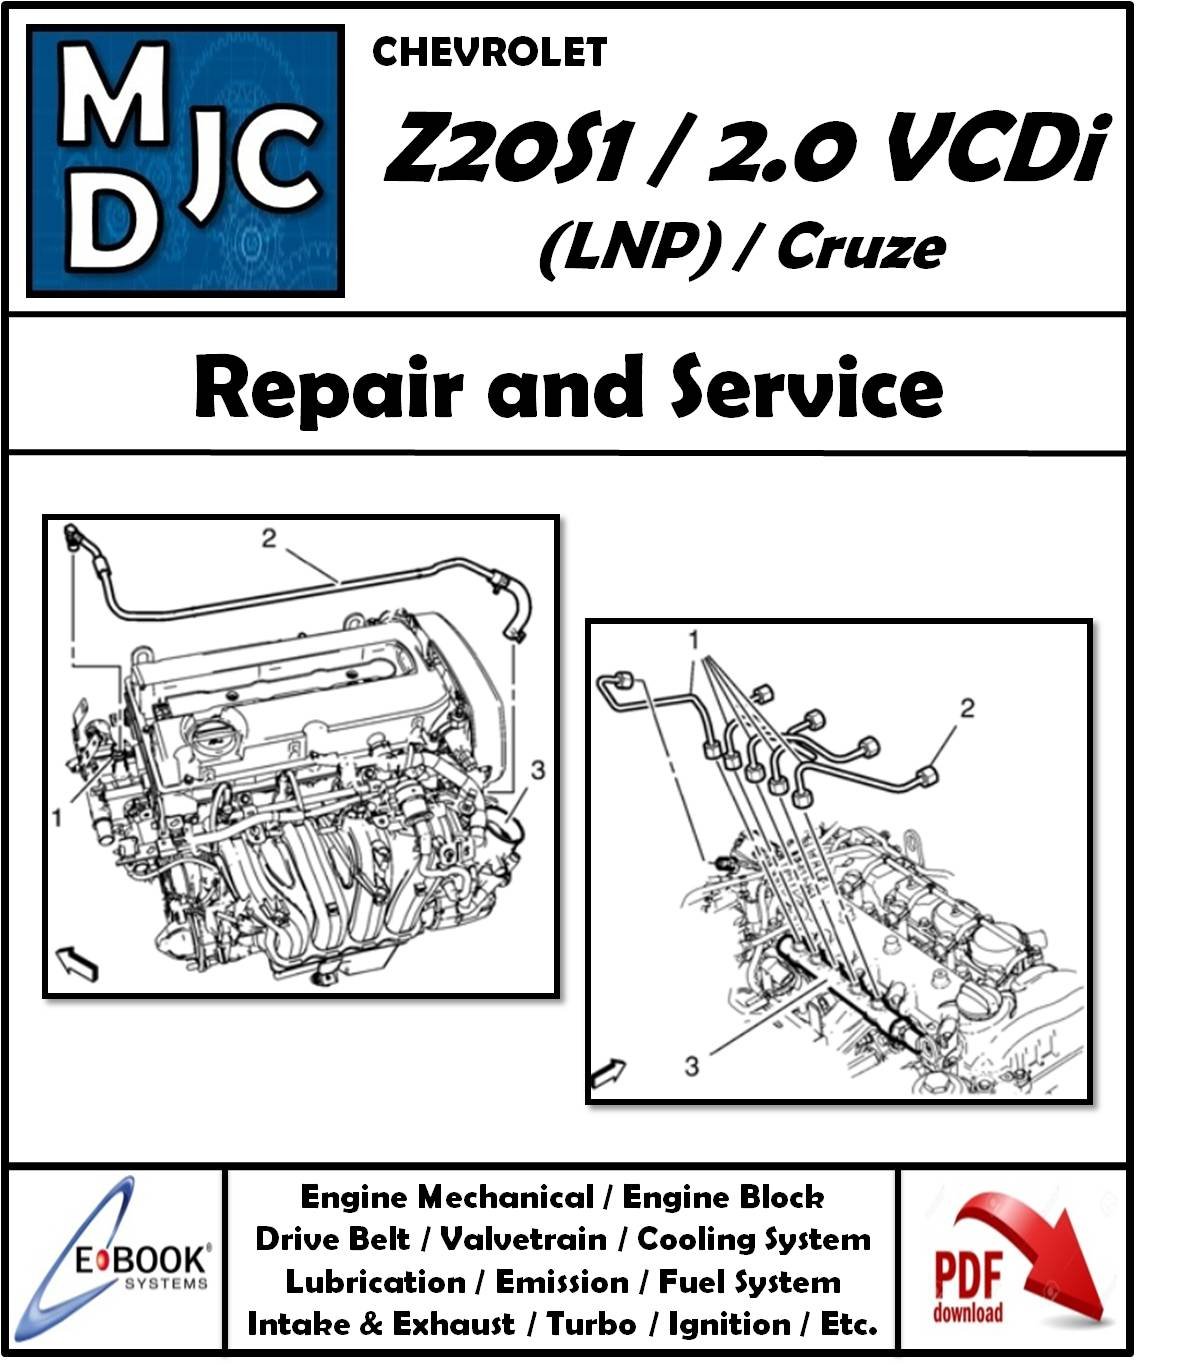 Manual de Taller Motor Chevrolet Z20S1 (2.0 L / VCDi / LNP / Cruze)